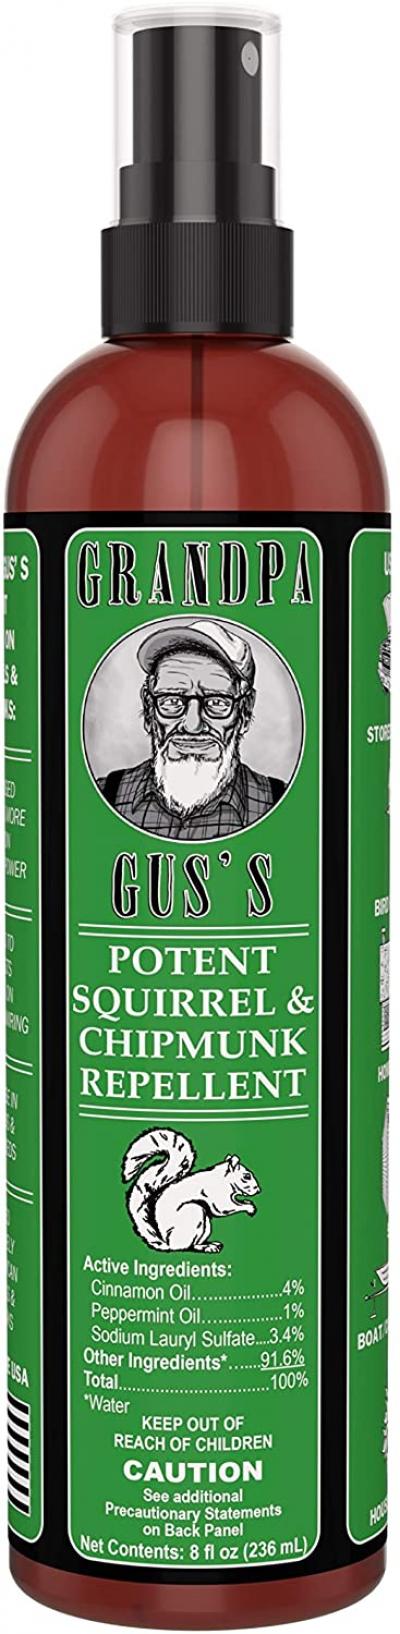 Grandpa Gus's Potent Squirrel & Chipmunk Repellent 8oz.